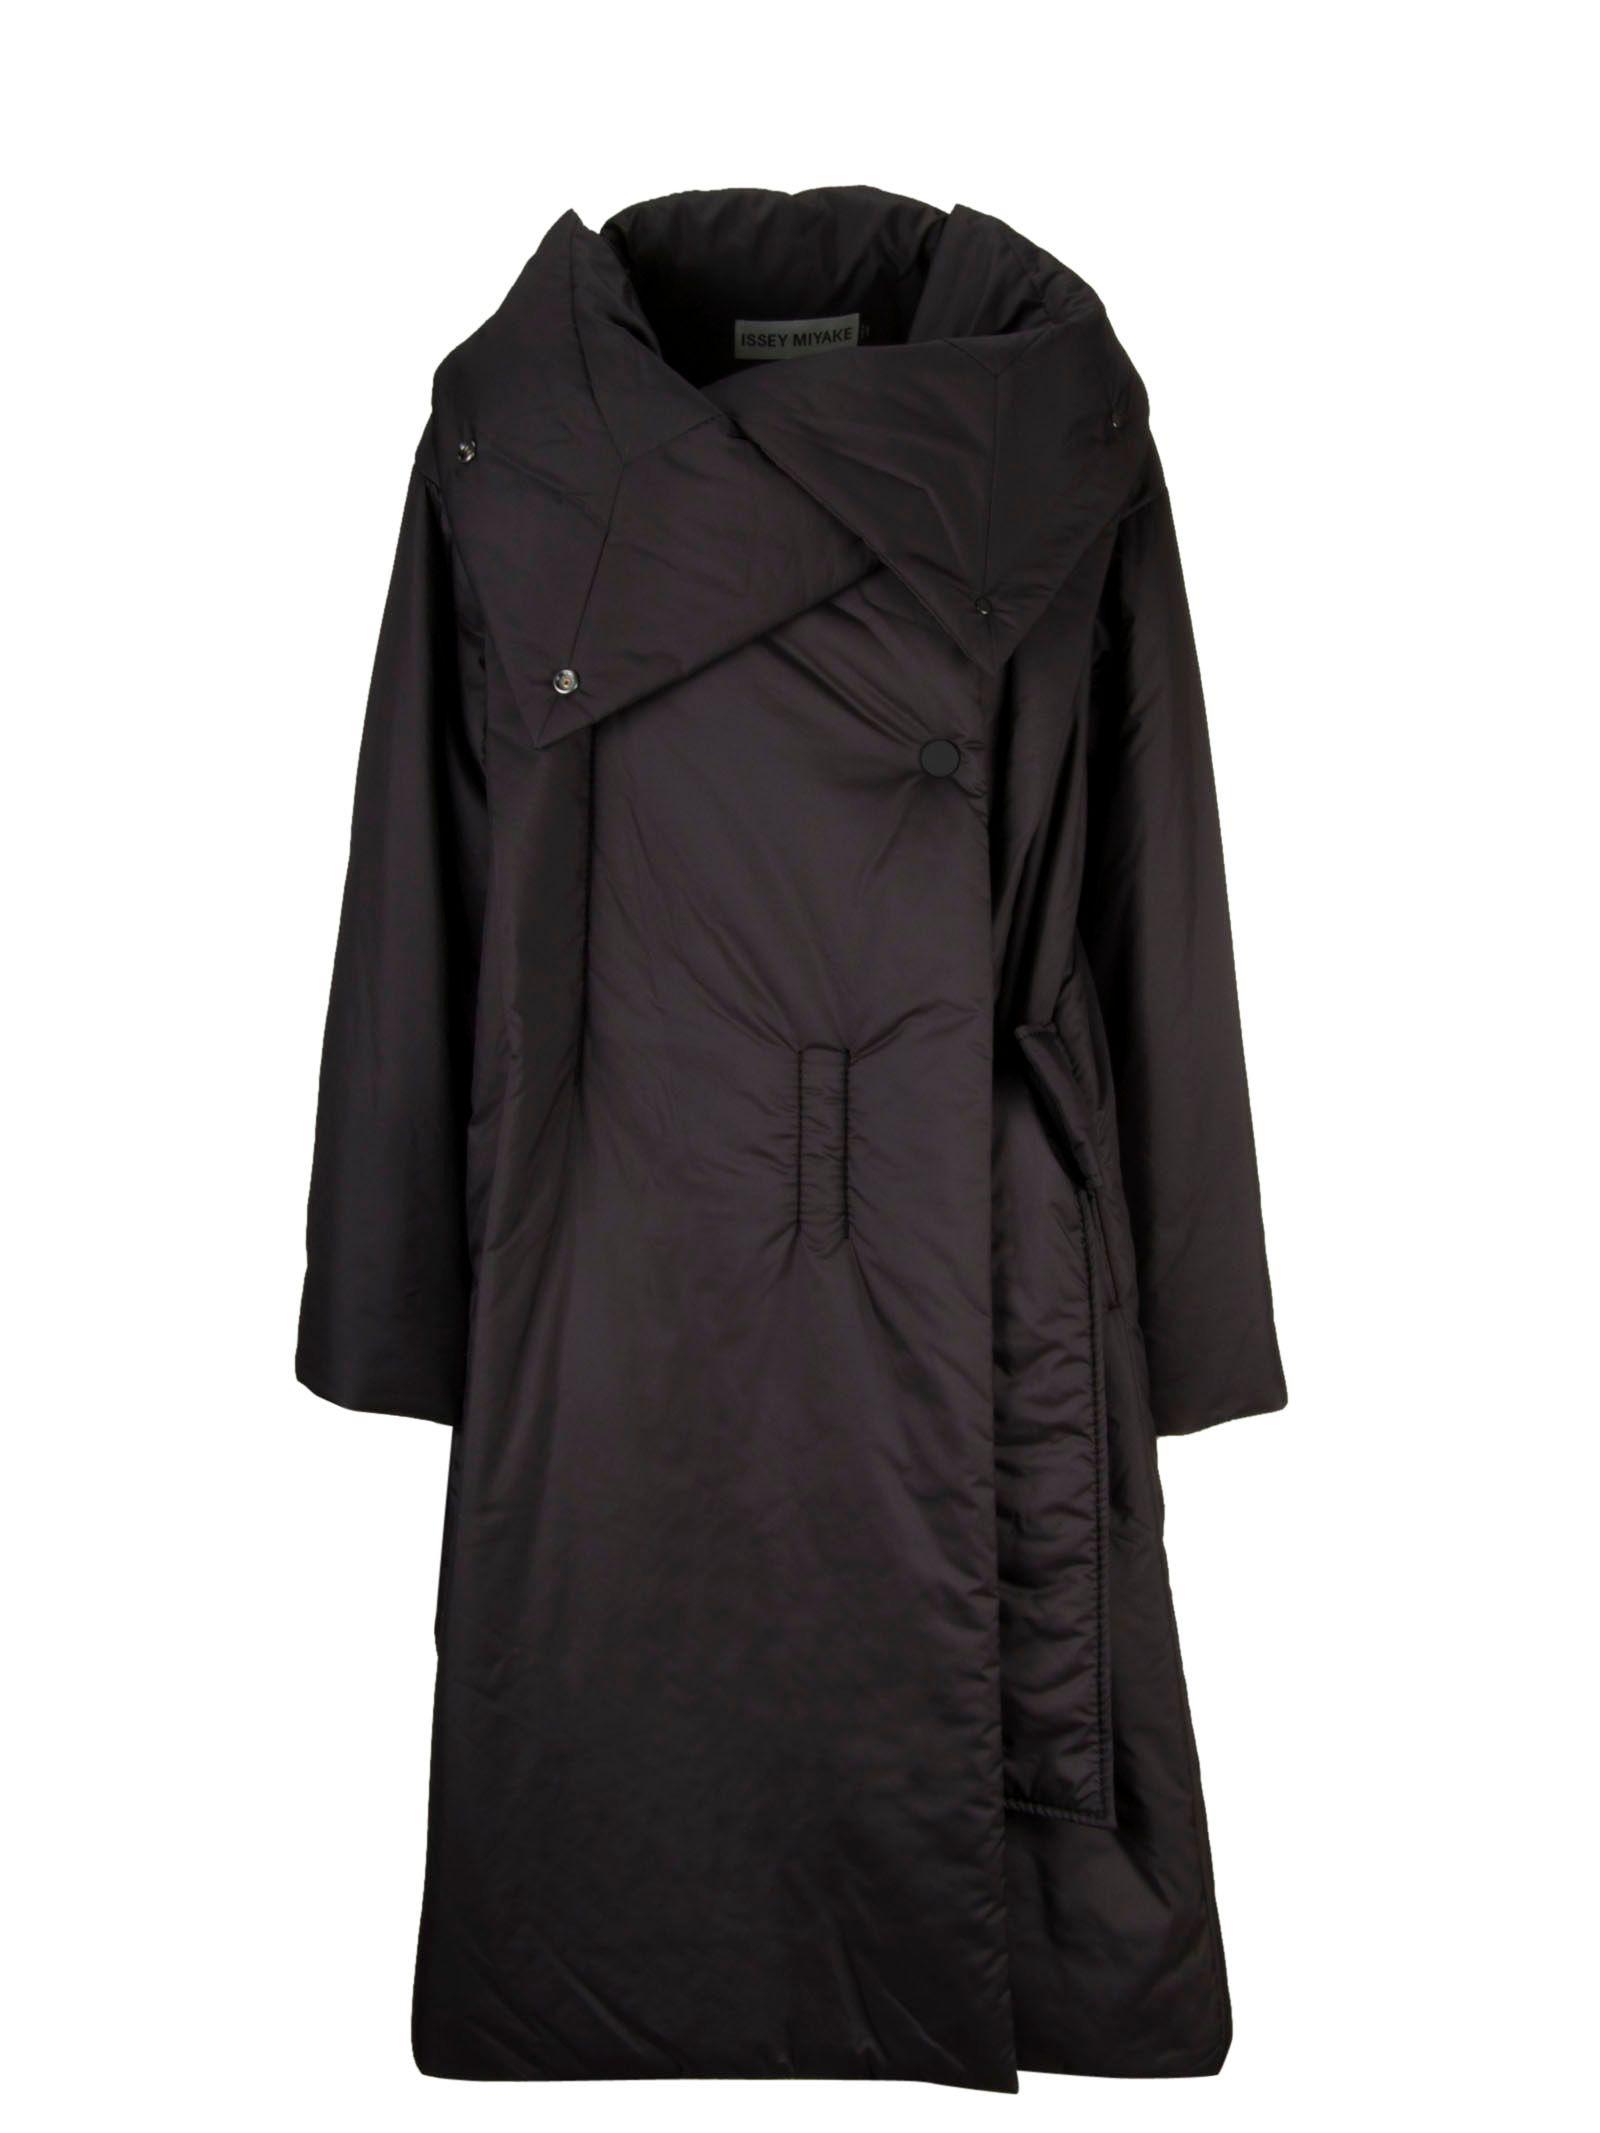 Issey Miyake Black Polyester Coat in Black - Lyst